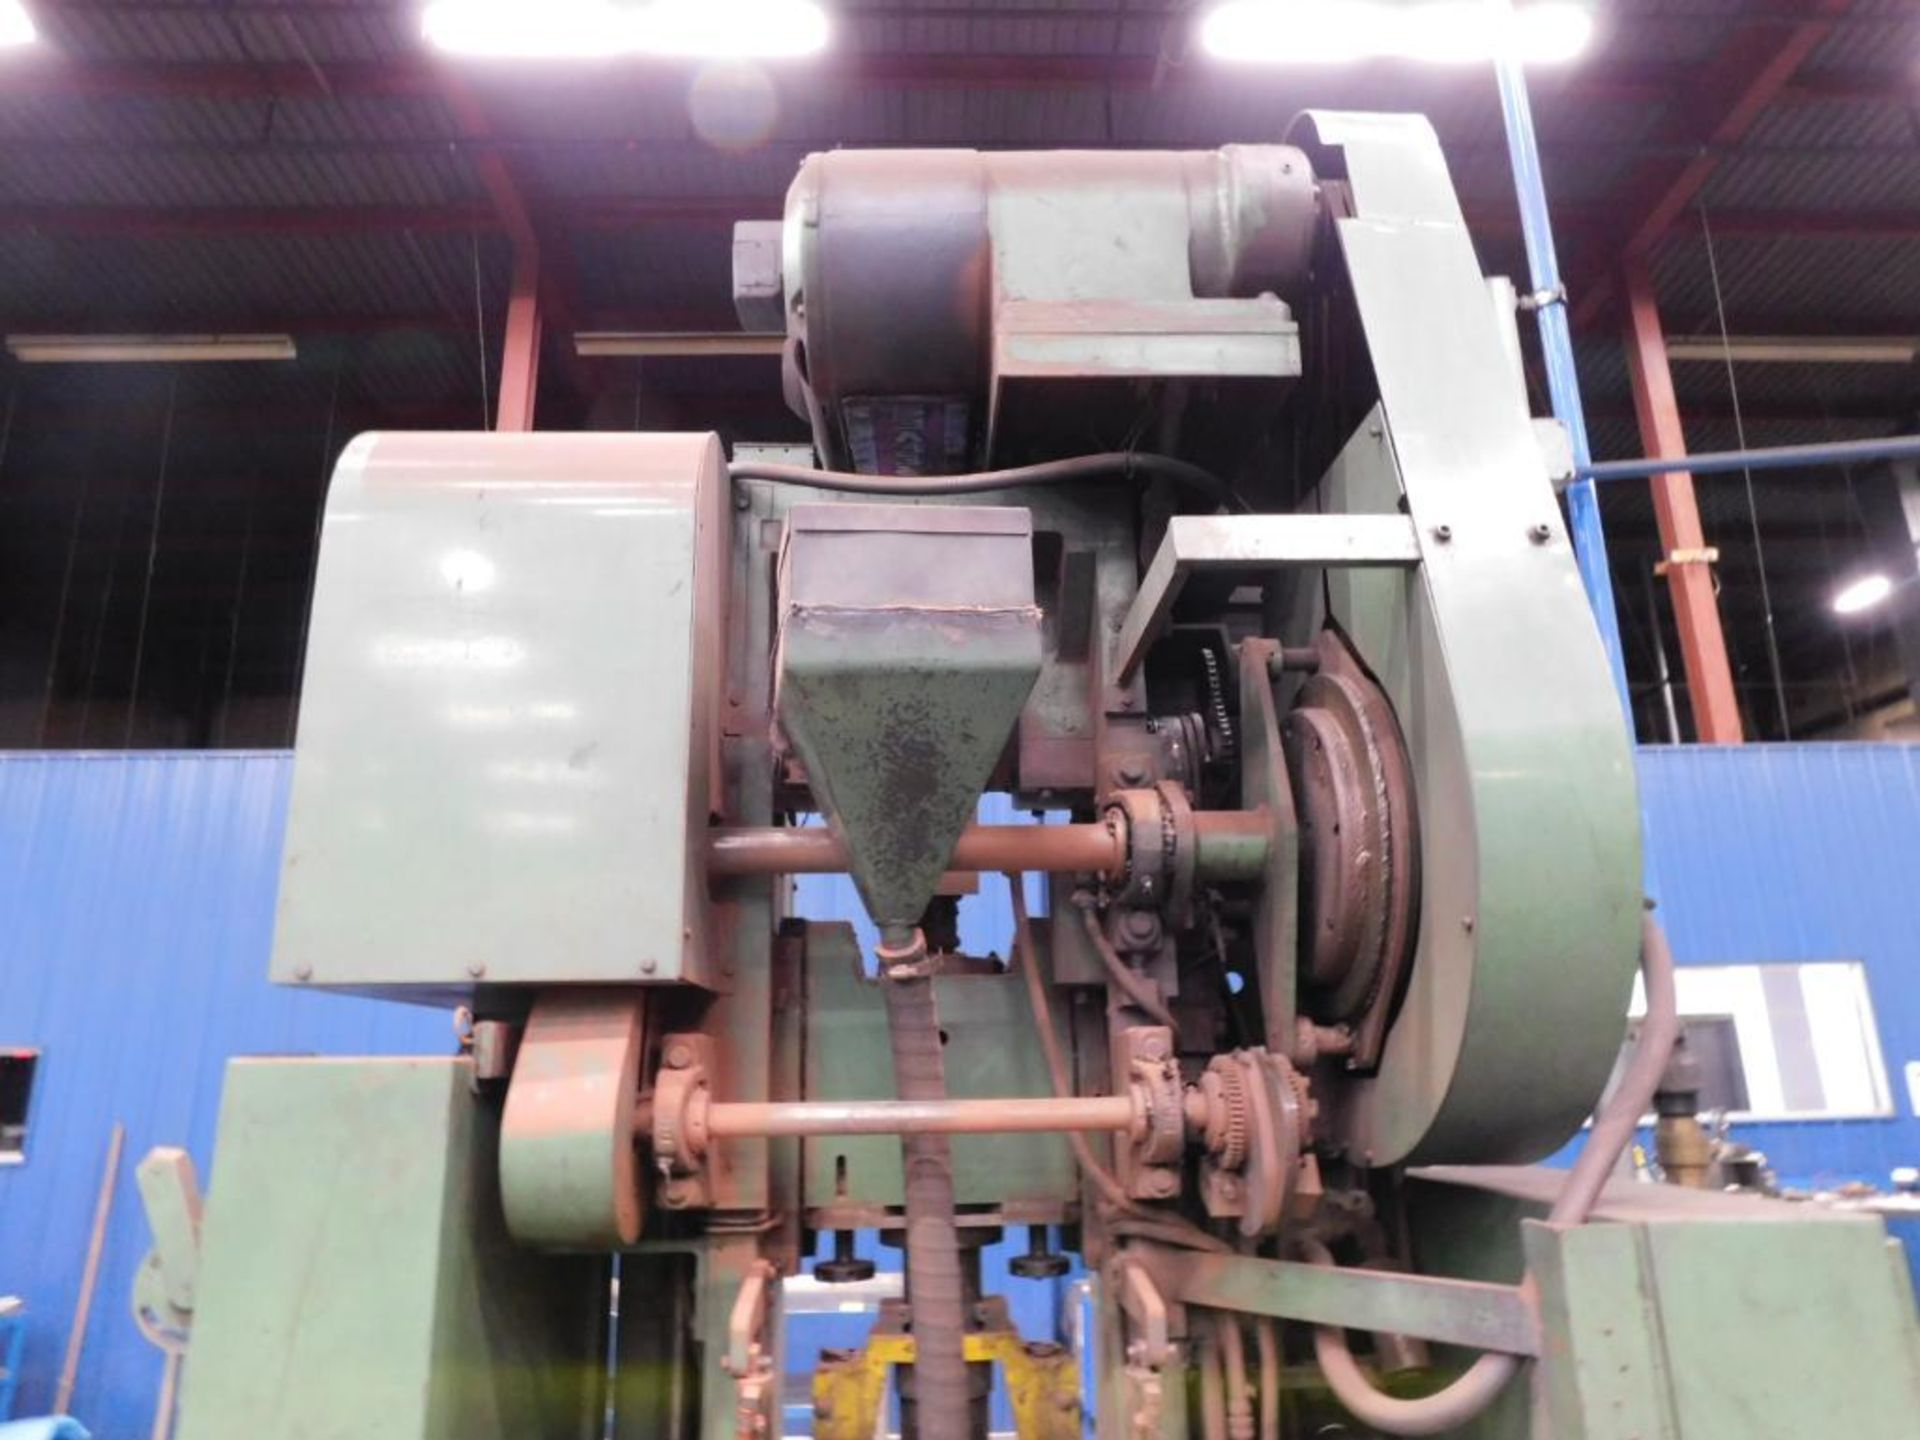 Gasbarre Powder Compacting Press, Mechanical, Model 30 Standard, S/N: 86256, 30 Ton Maximum Pressing - Image 14 of 22